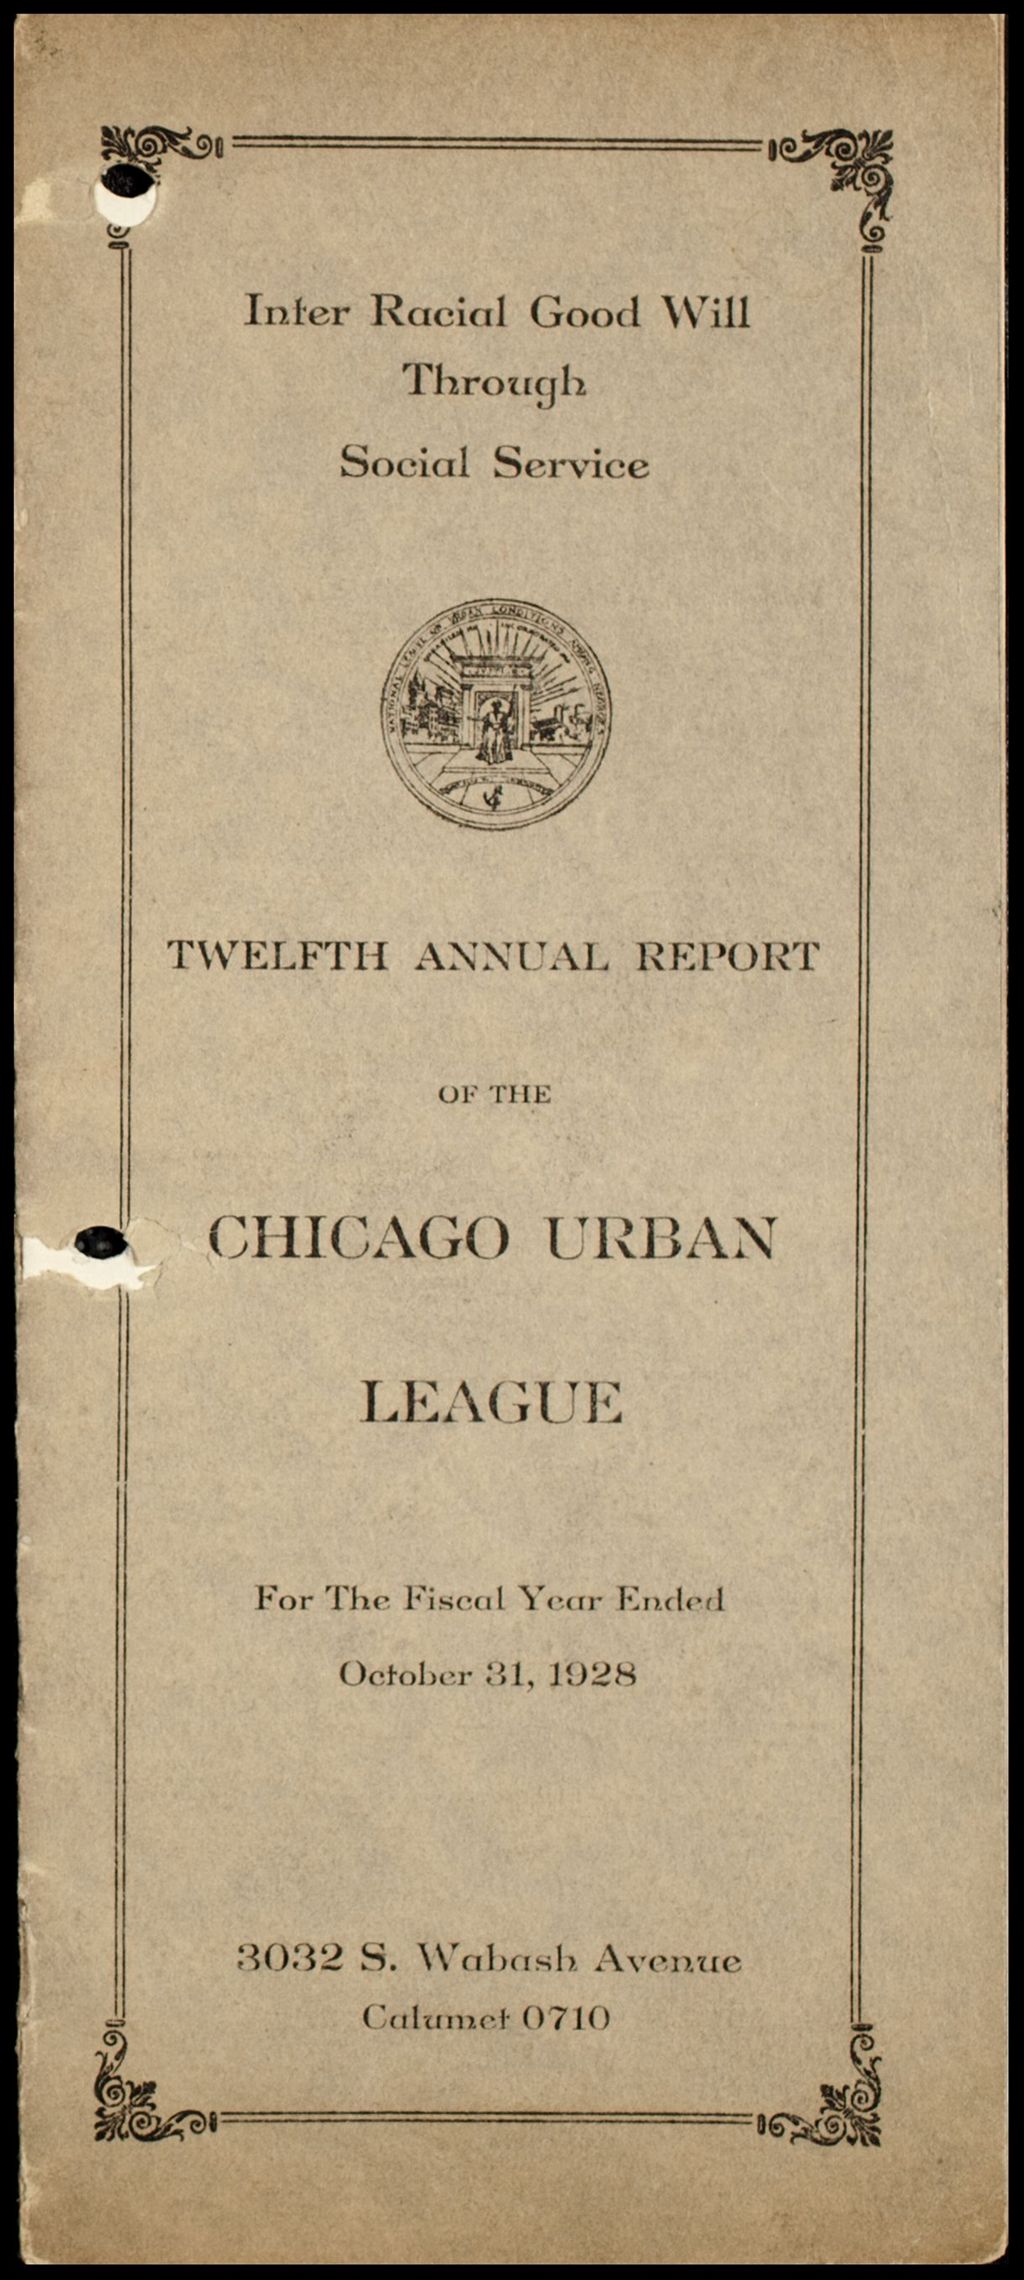 Miniature of Chicago Urban League report, 1928 (Folder I-8)